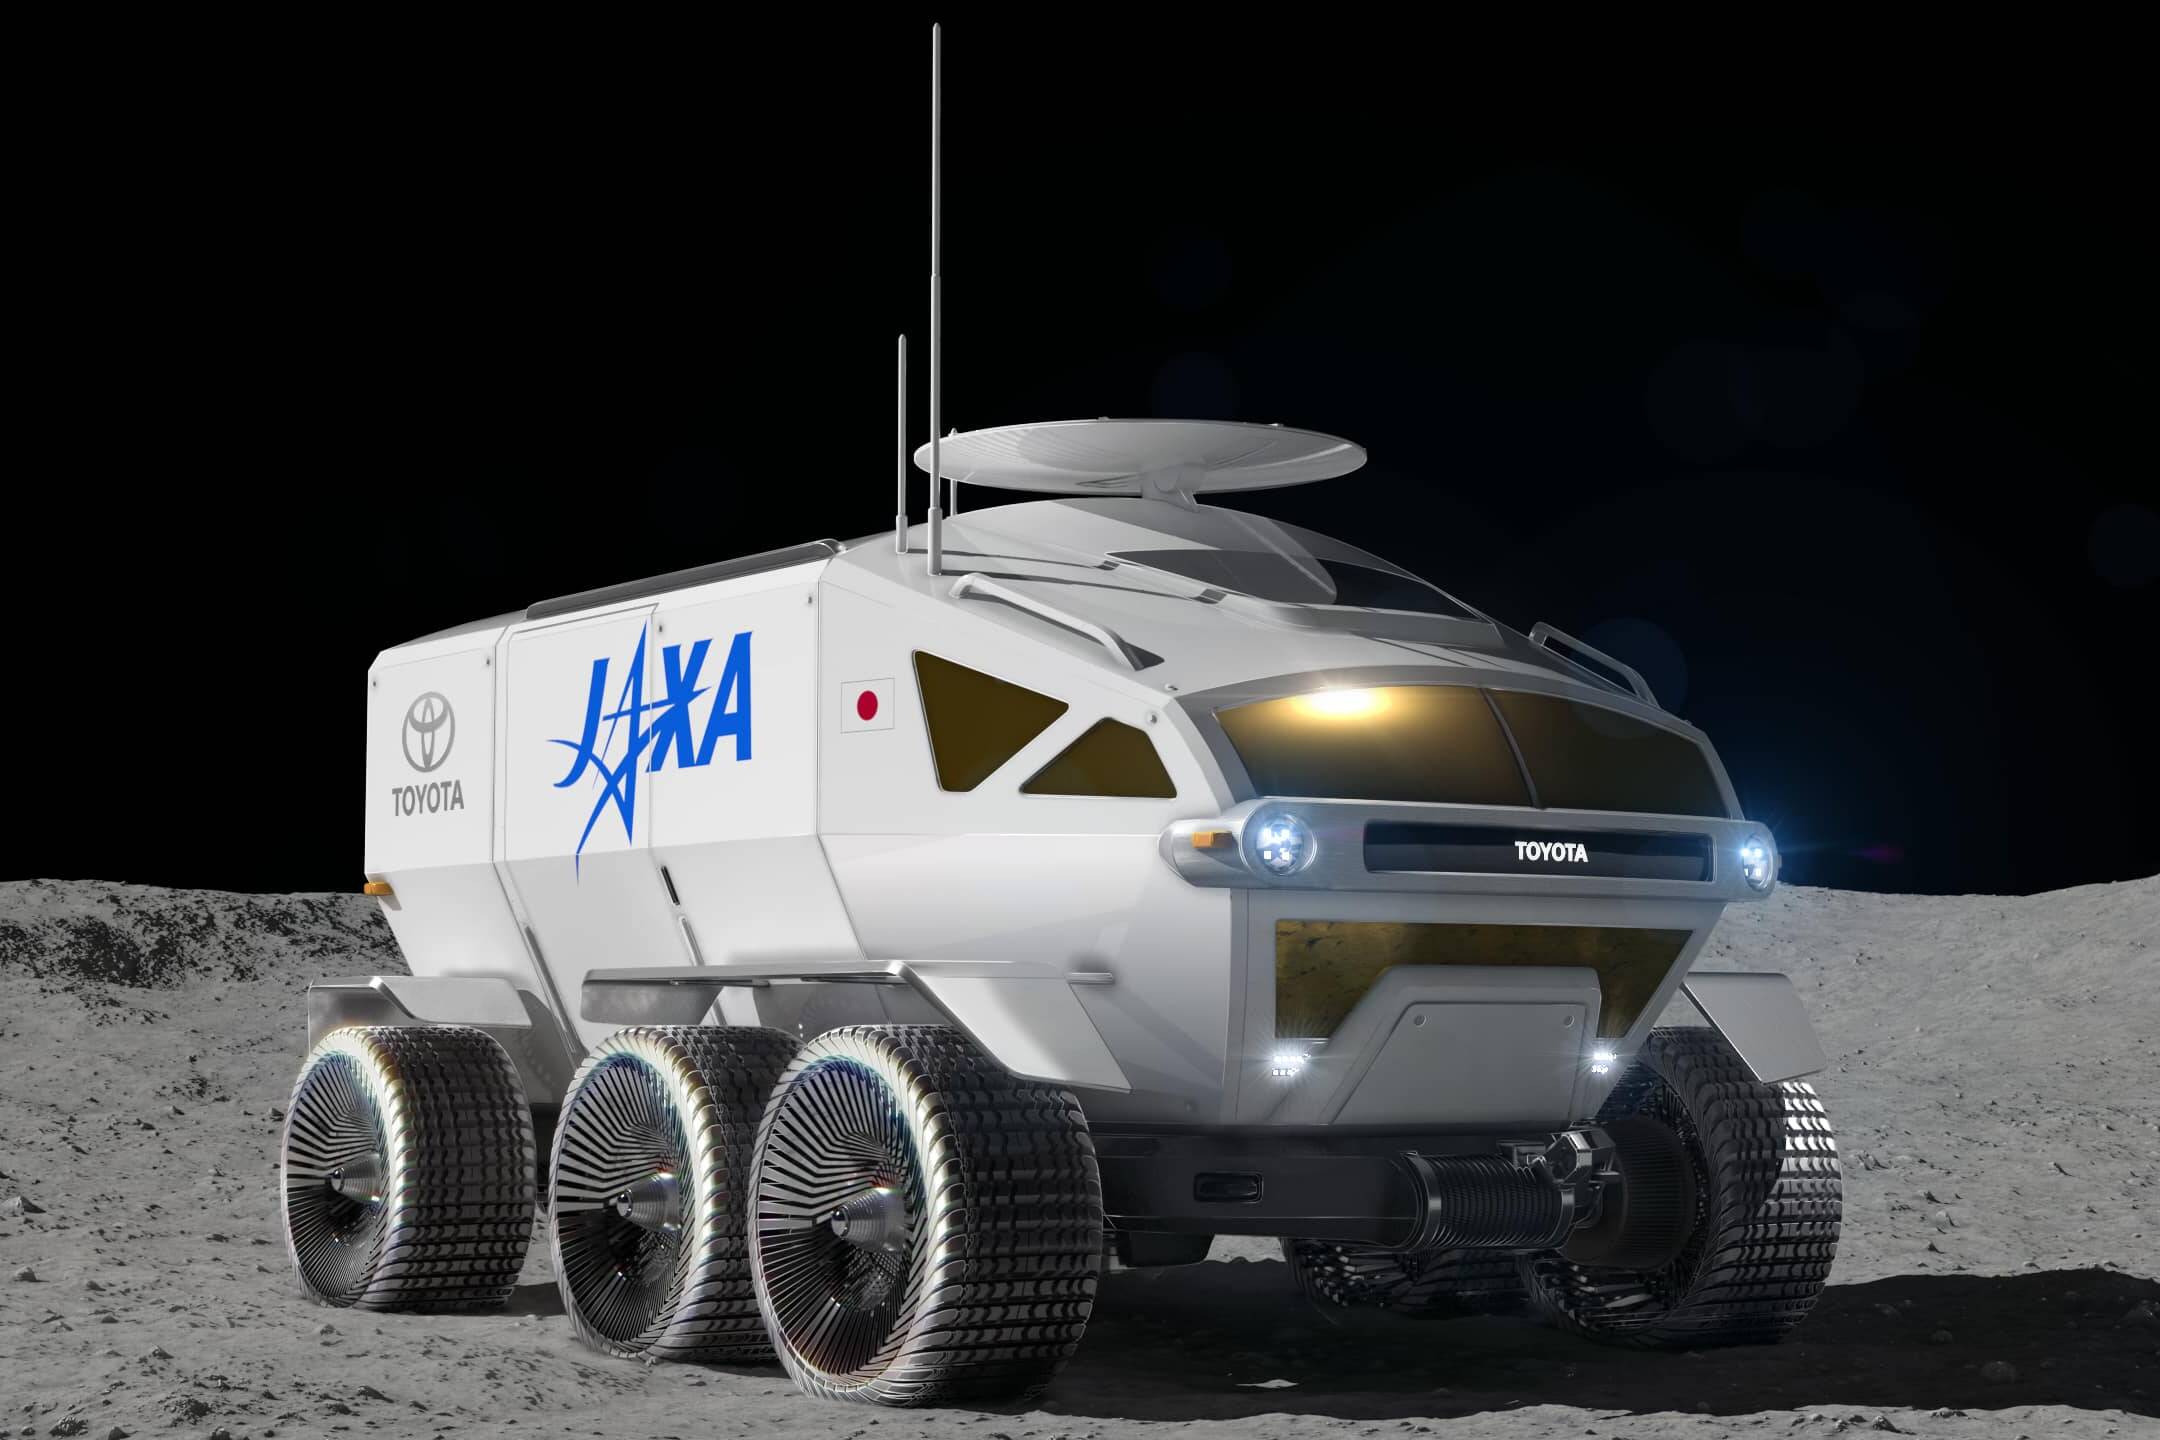 Preis auf Anfrage - das Mondmobil jetzt auf Toyota.de